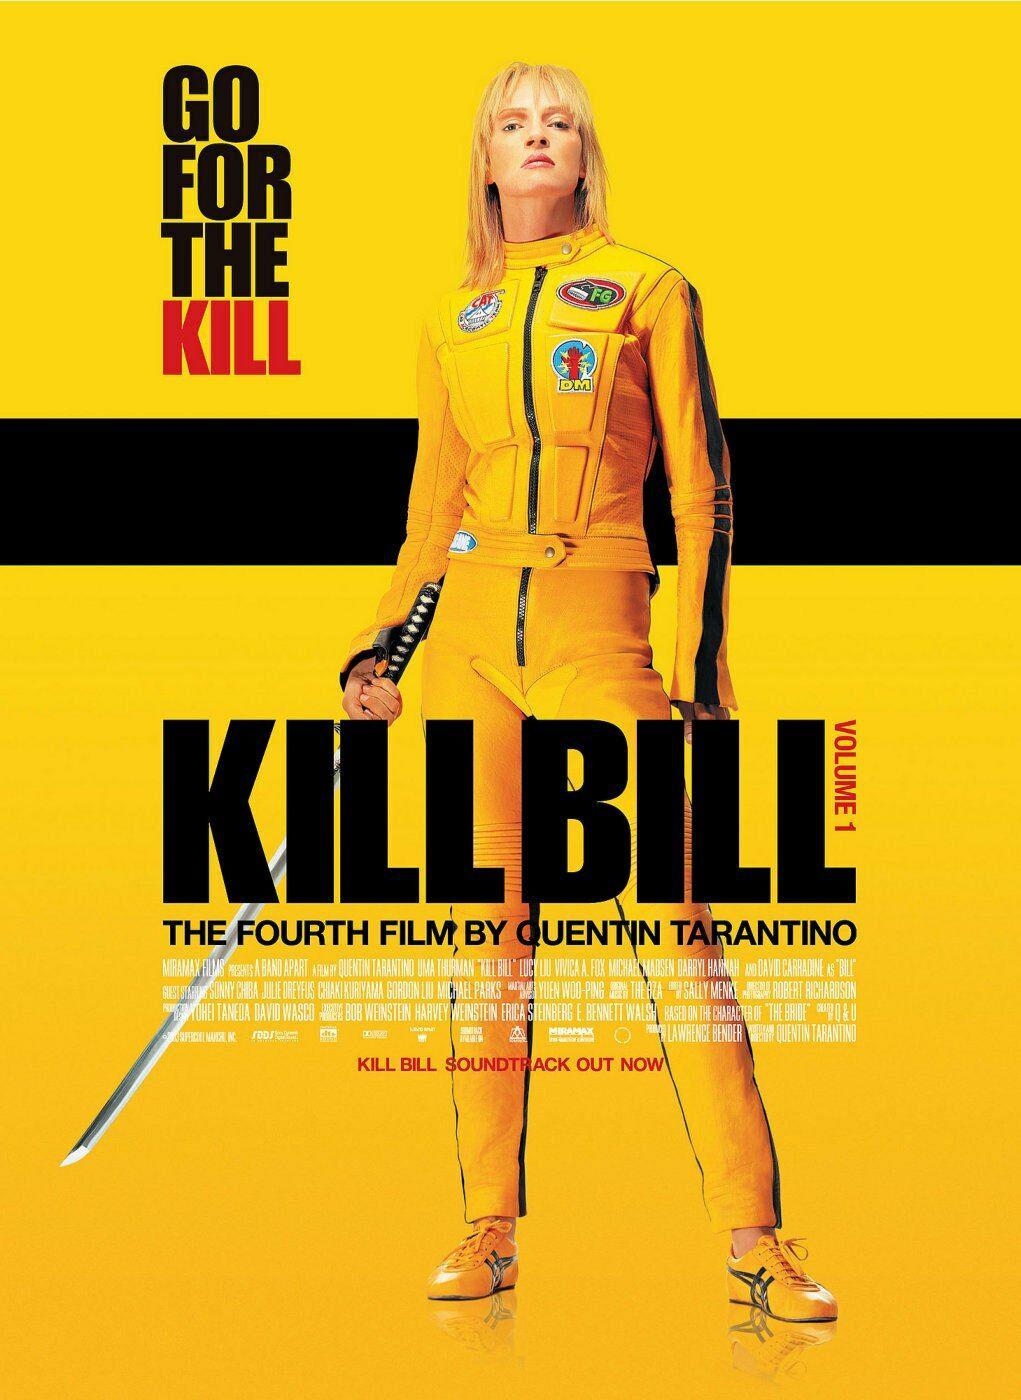 杀死比尔 Kill.Bill.Vol.1.2003.1080p.BluRay.REMUX.AVC.LPCM.5.1-FGT 27.82GB